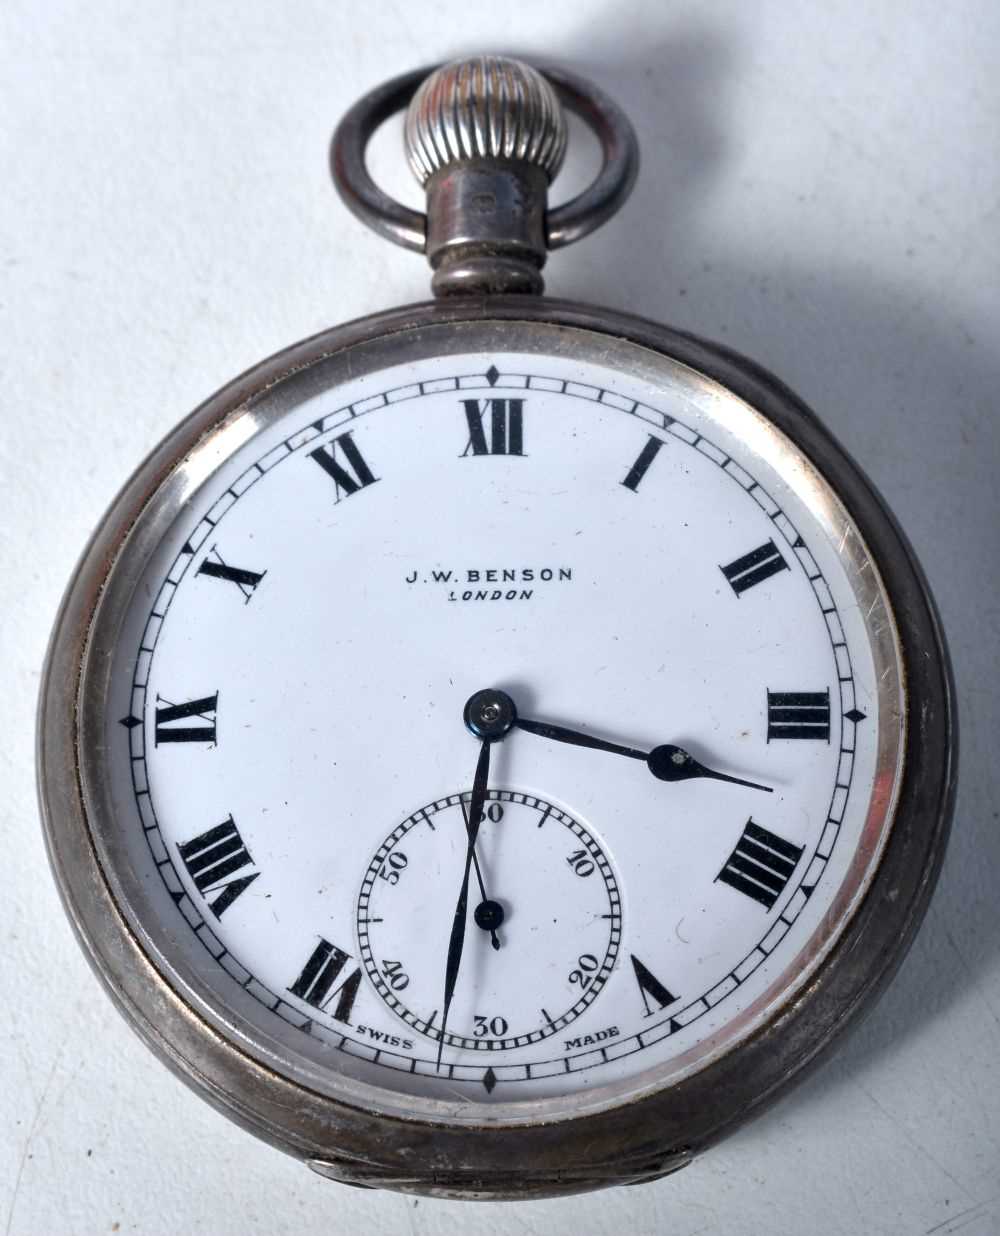 J.W. BENSON Silver Gents Open Face Pocket Watch .  Hallmarked London 1935.  Movement - Hand-wind.